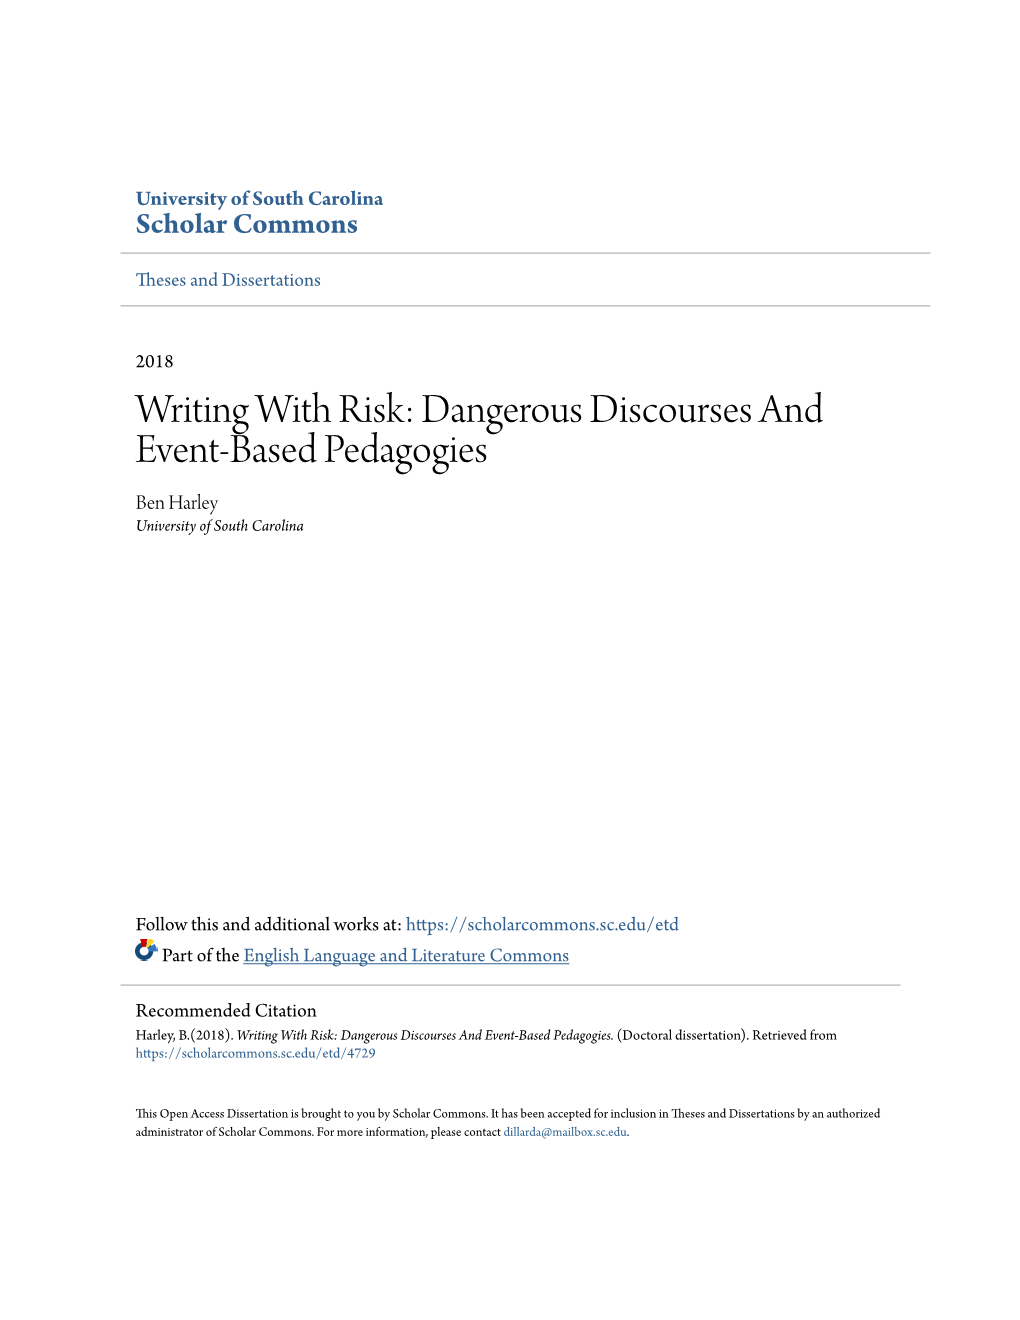 Dangerous Discourses and Event-Based Pedagogies Ben Harley University of South Carolina